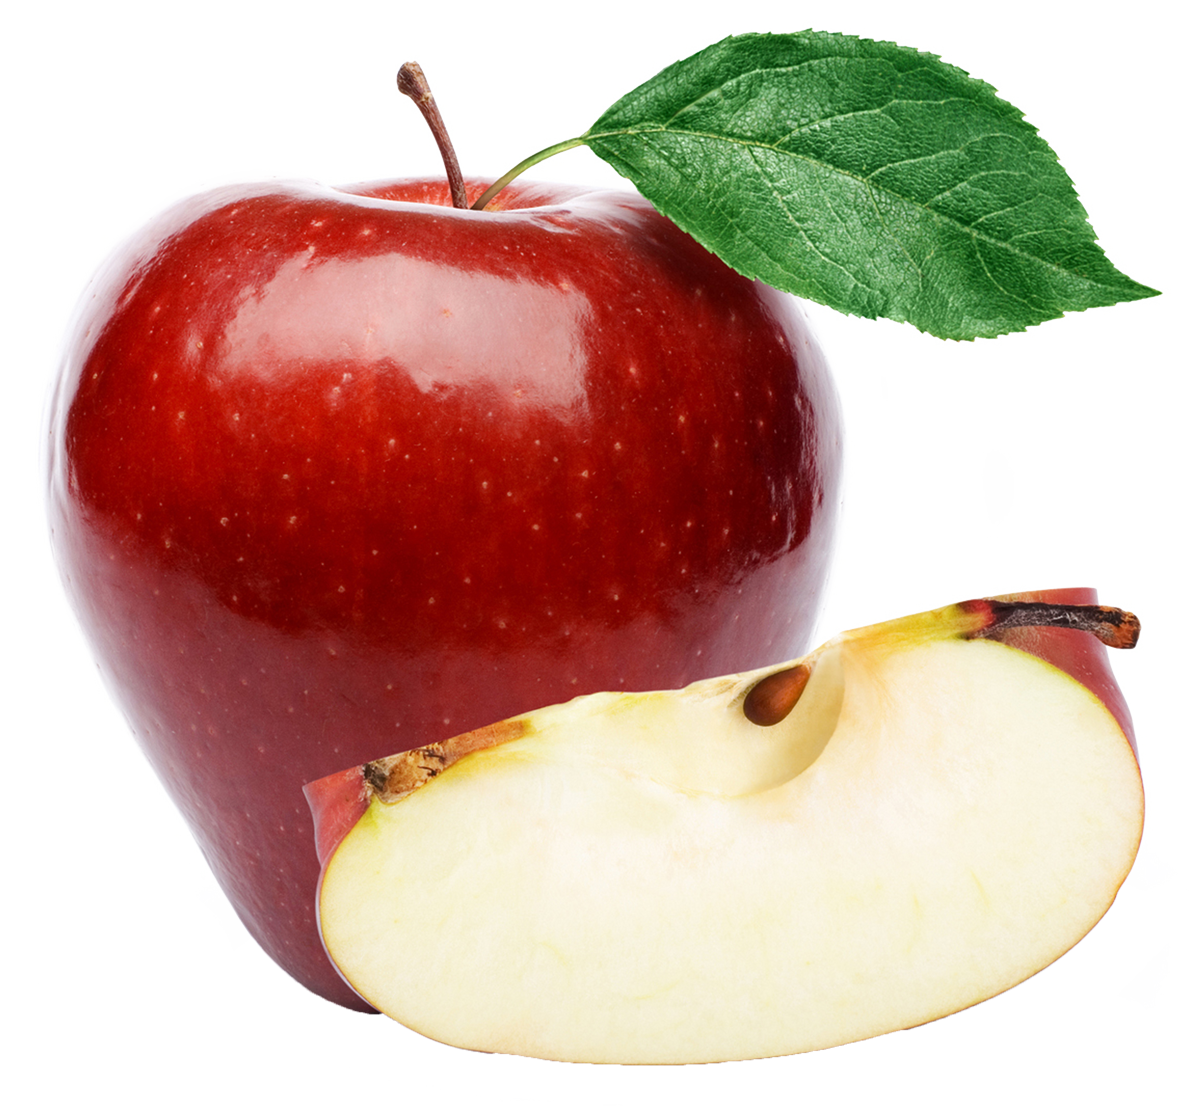 Sliced PNG transparente de la fruta de manzana